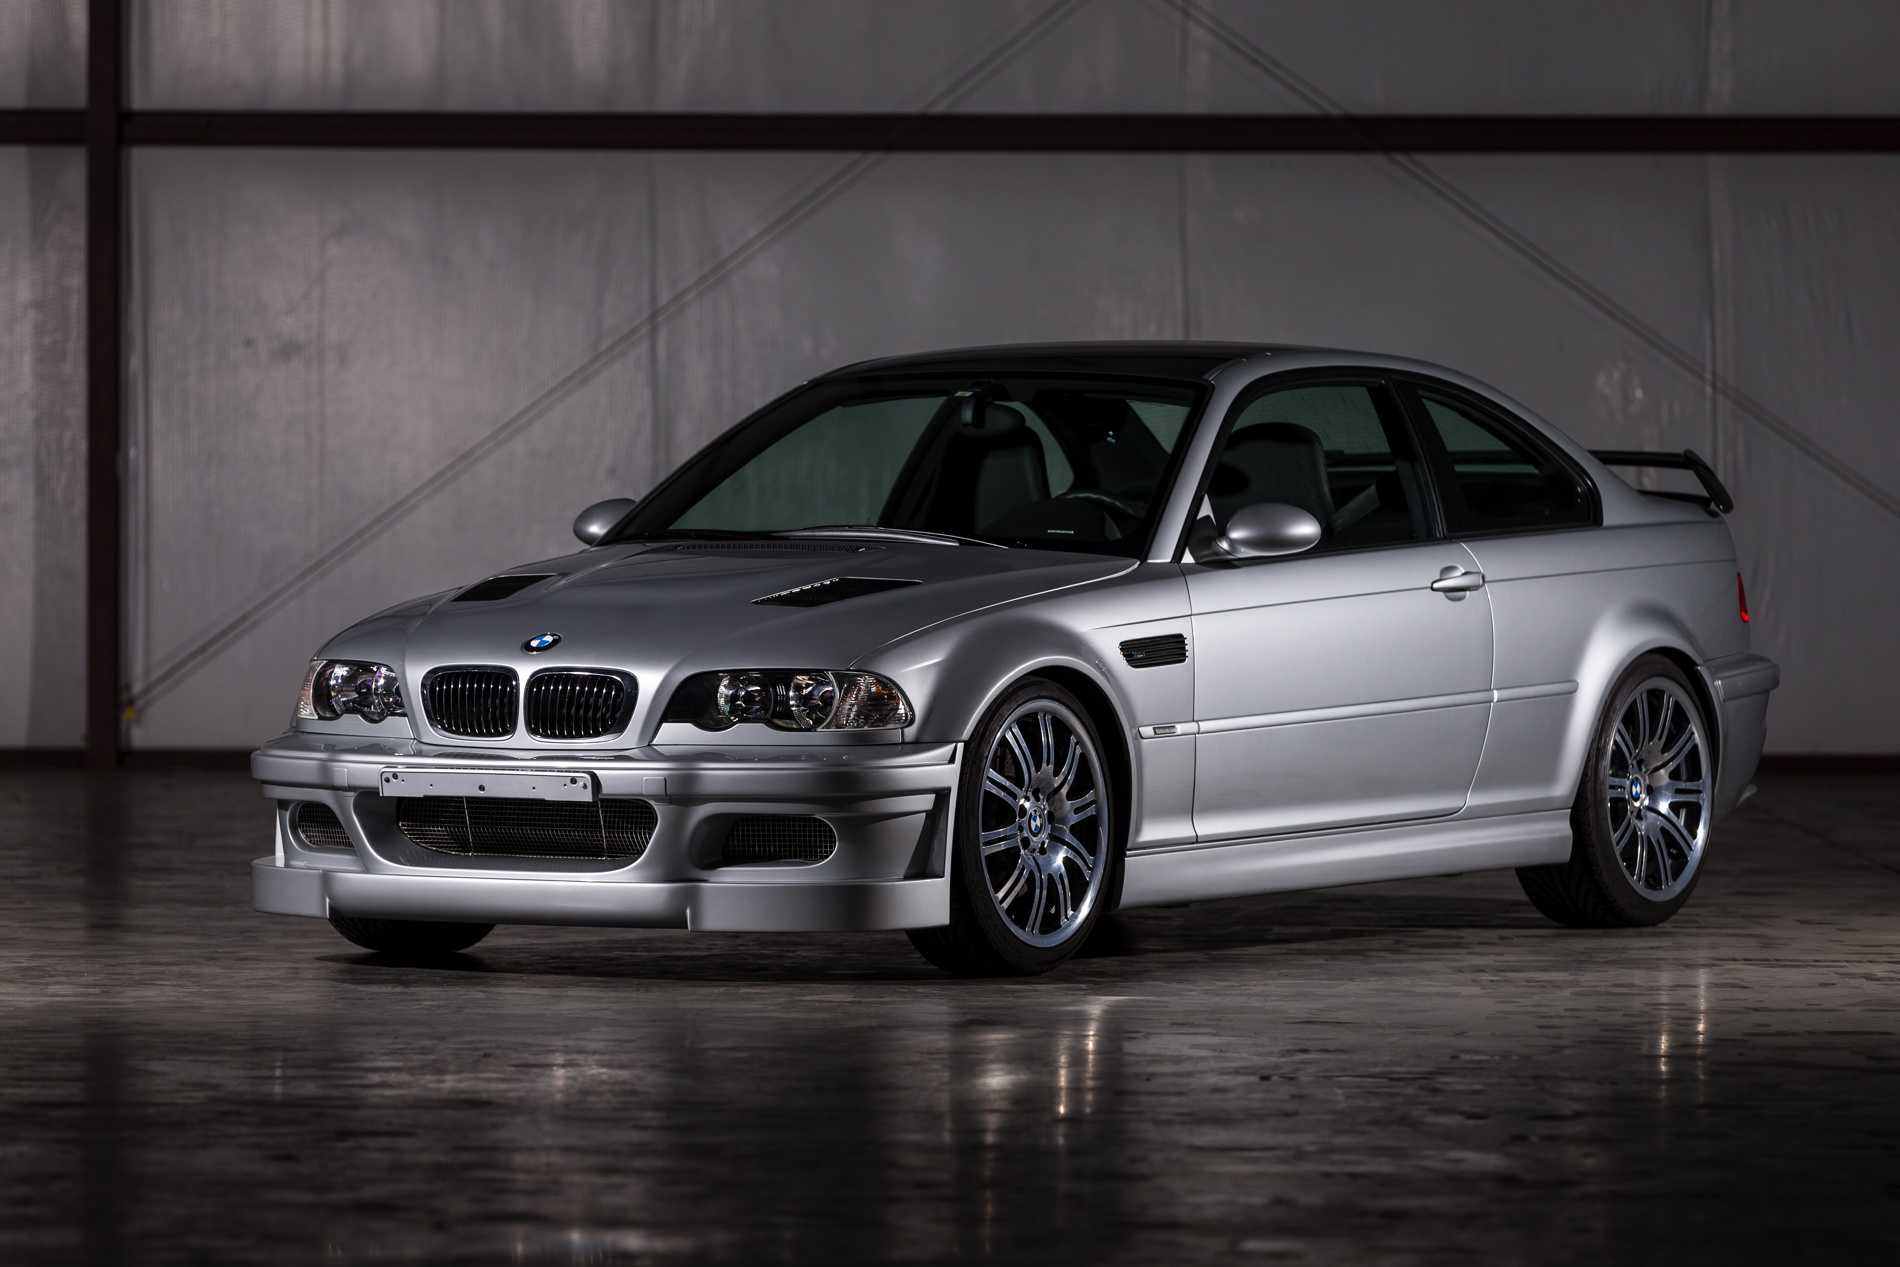 BMW M3 Backgrounds, Compatible - PC, Mobile, Gadgets| 1900x1267 px